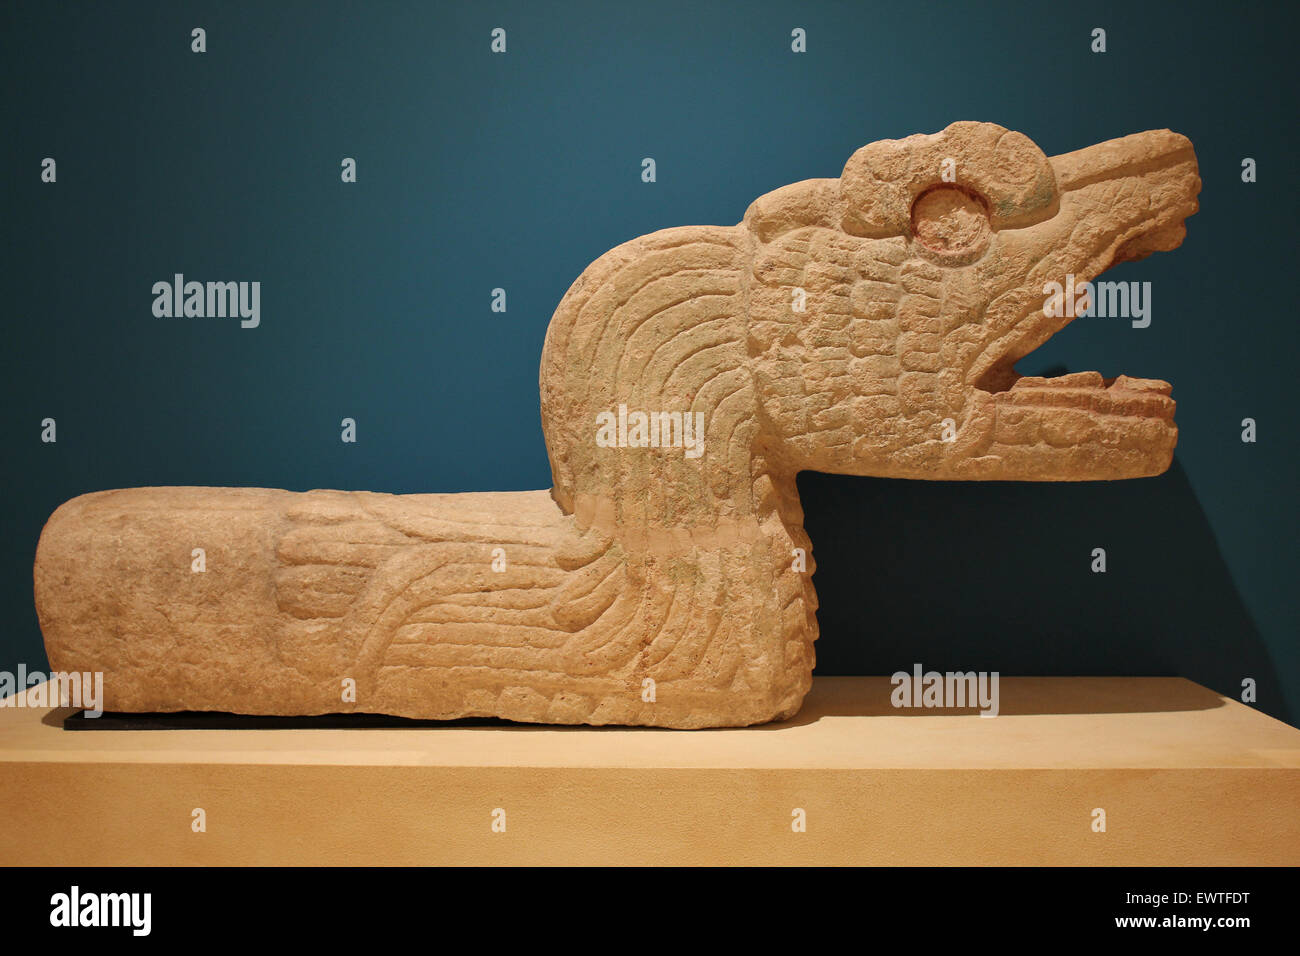 Gefiederte Schlange, Chichén Itzá, Yucatán, Mexiko frühe Postklassik (900-1250 n. Chr.) Stockfoto